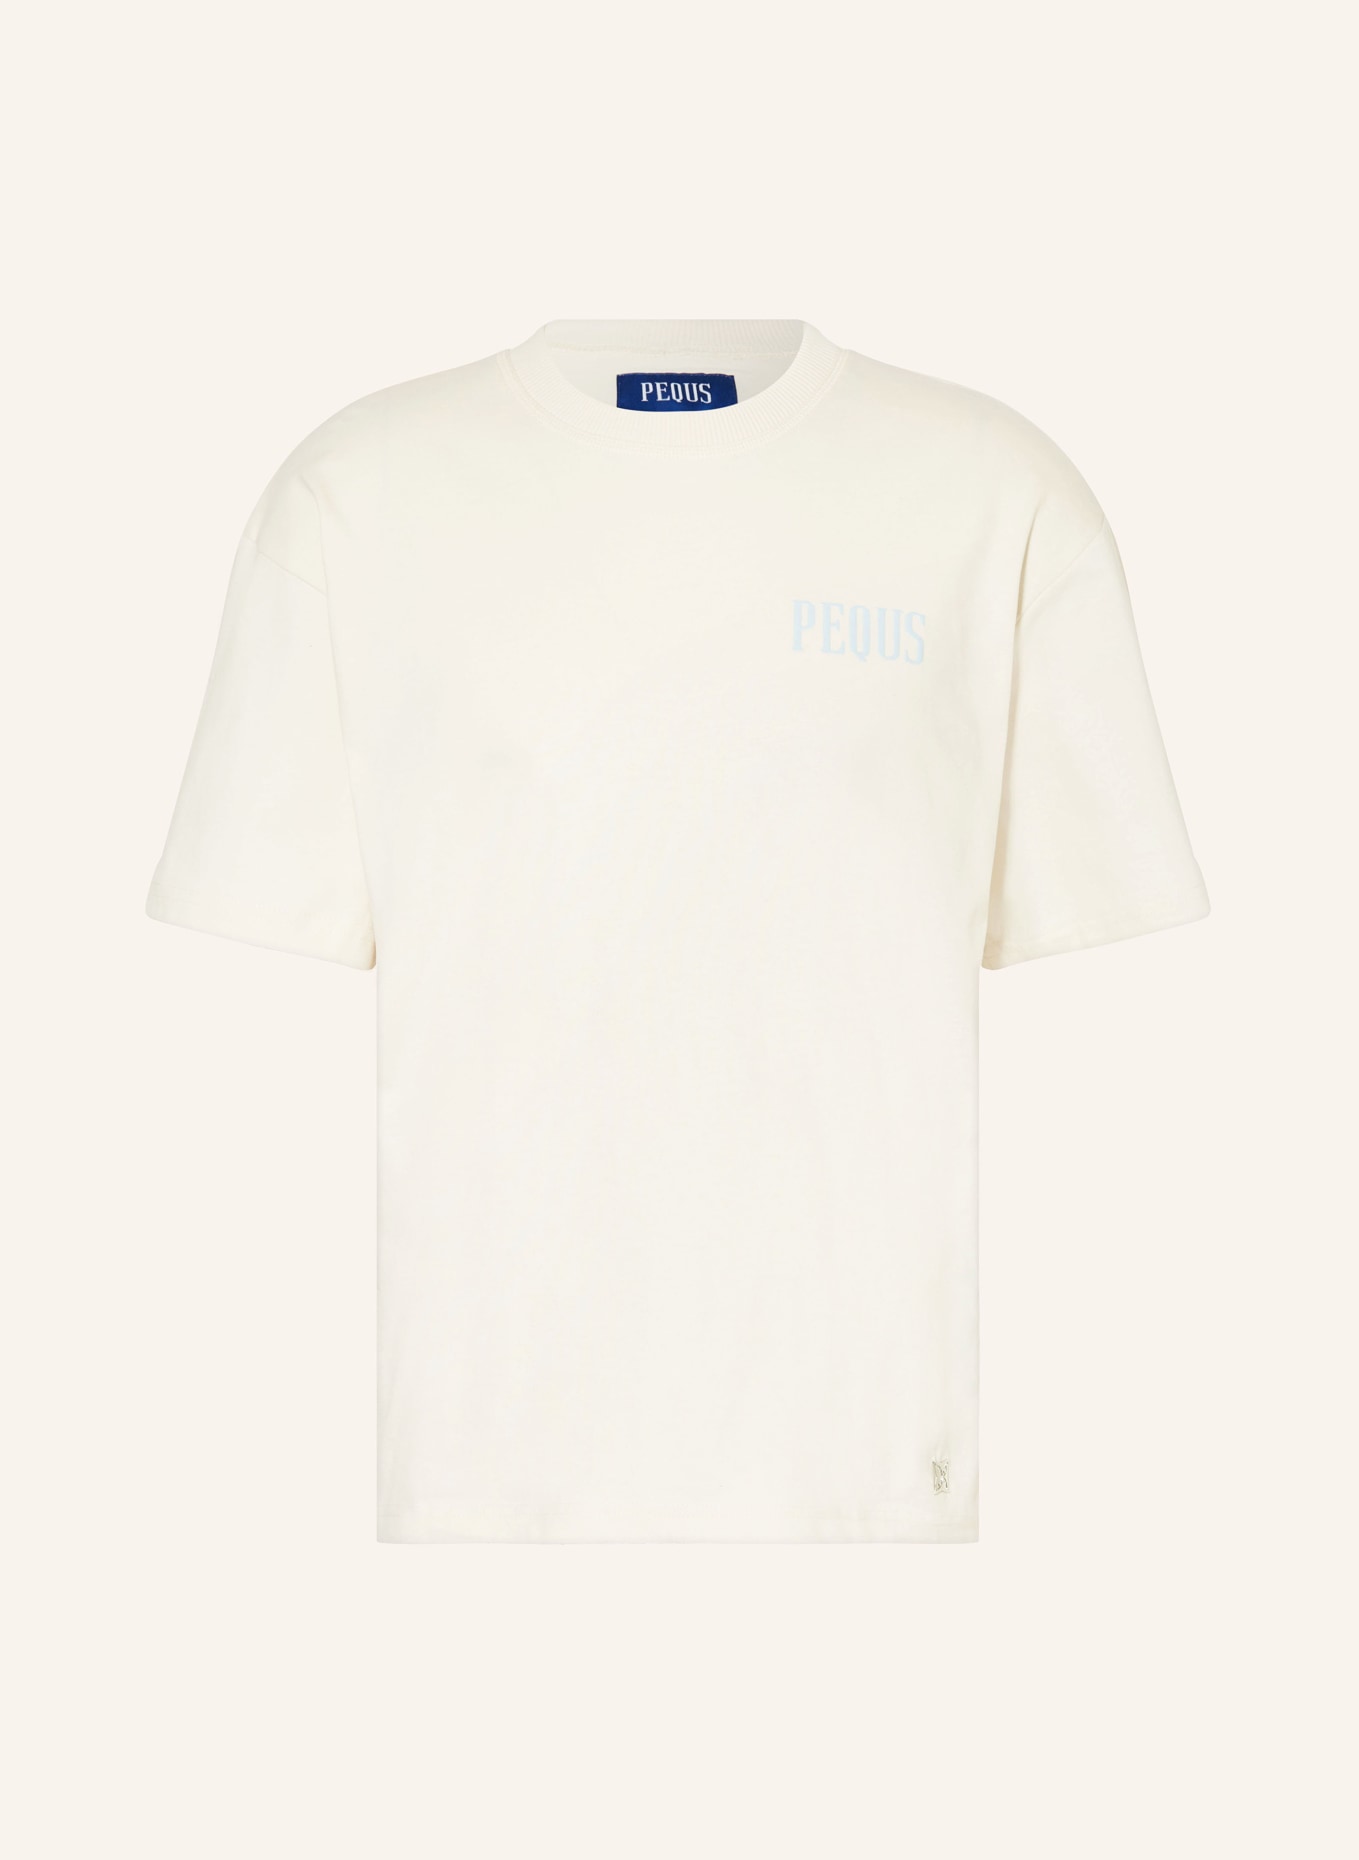 PEQUS T-Shirt, Farbe: ECRU (Bild 1)